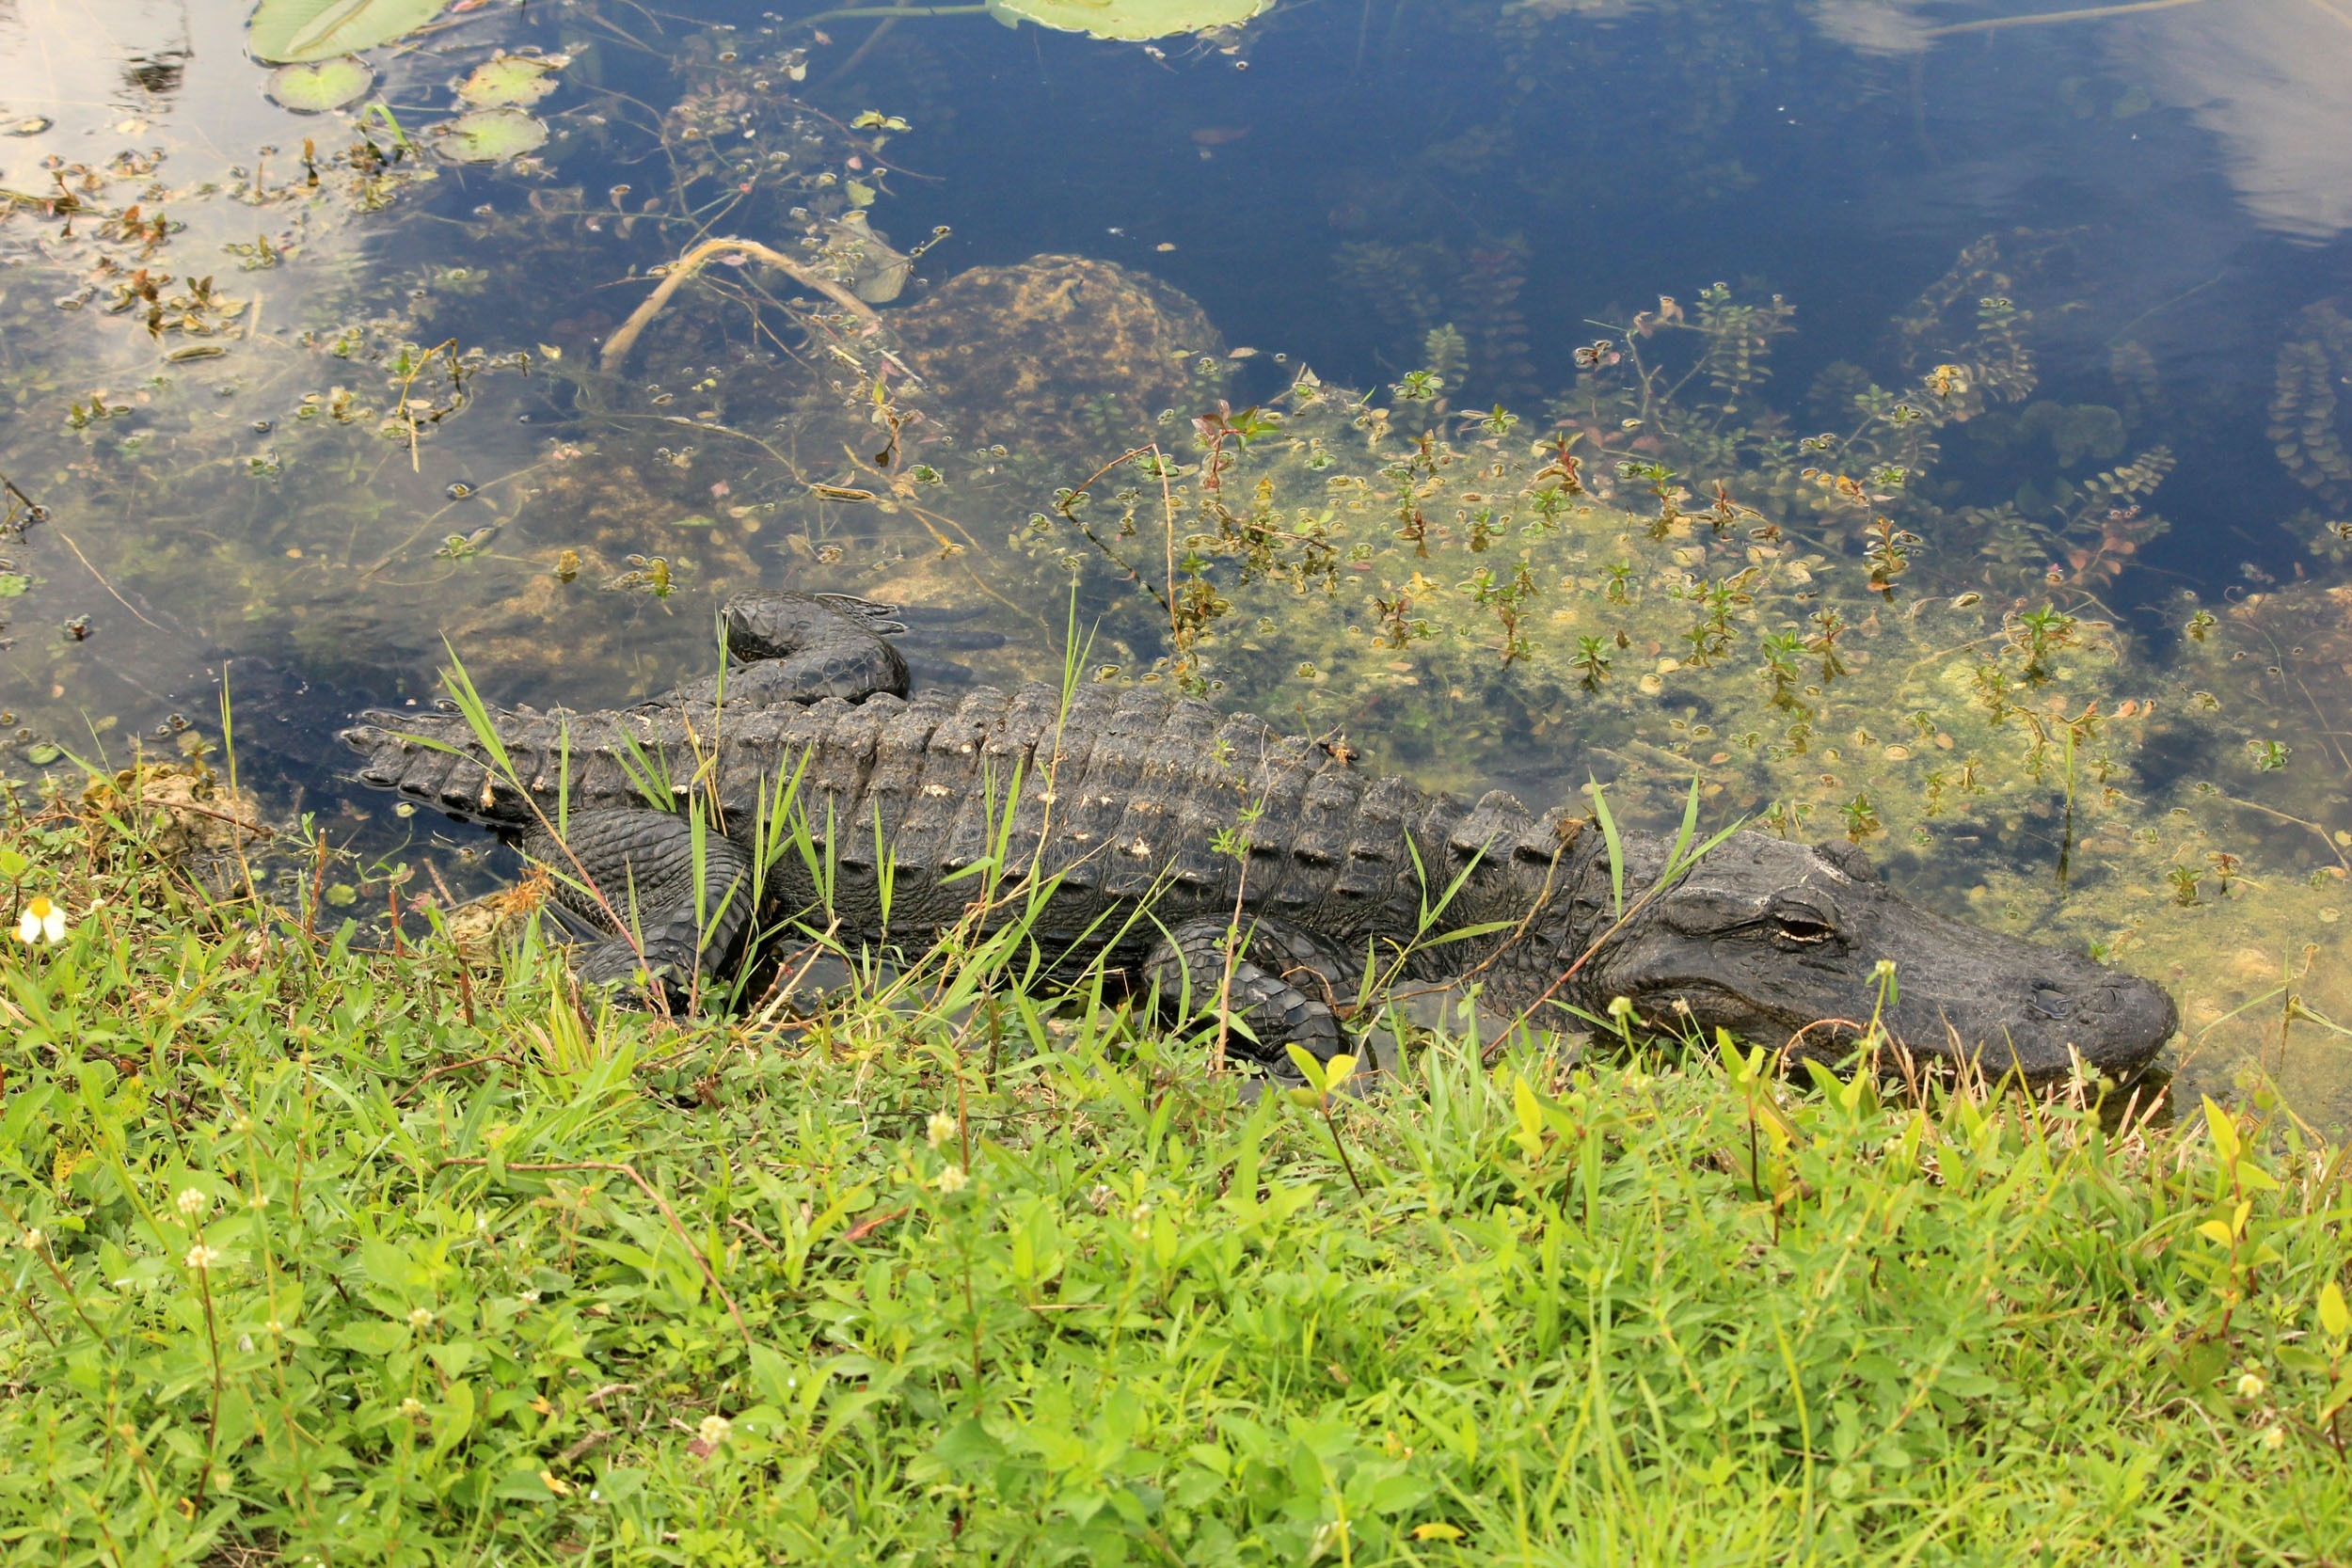 black crocodile on water near grass